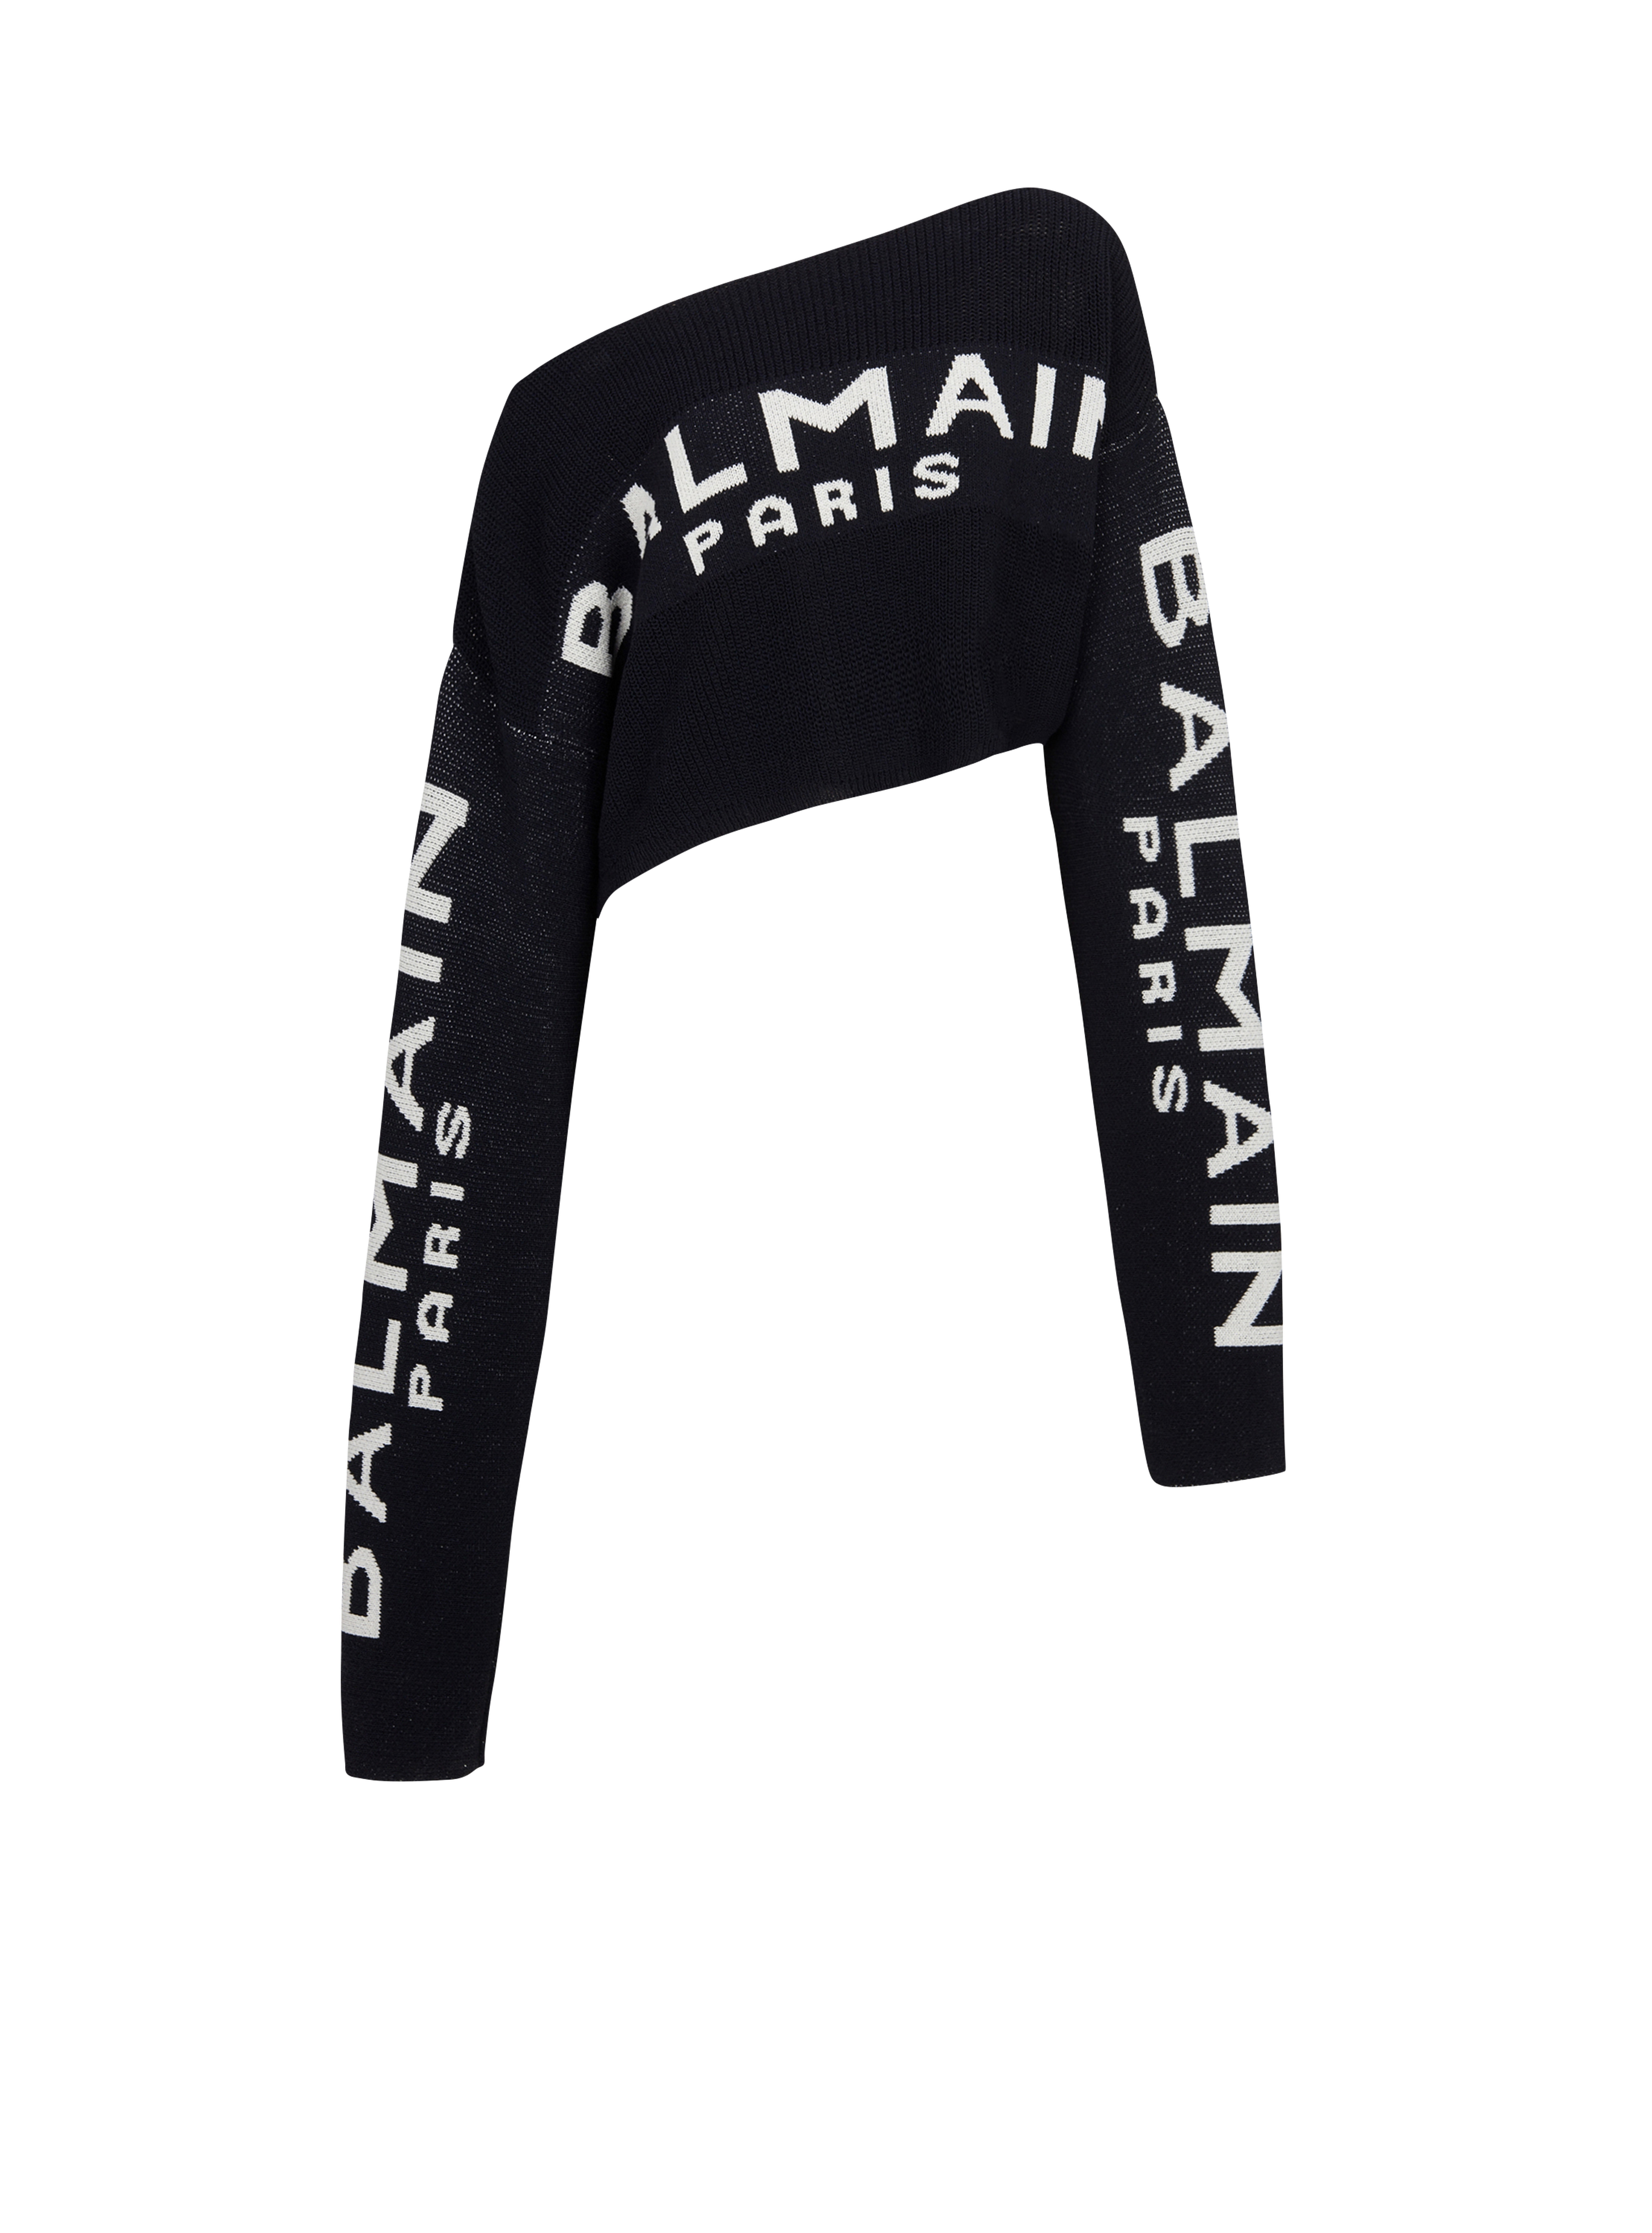 Cropped knit sweater with graffiti Balmain logo print, black